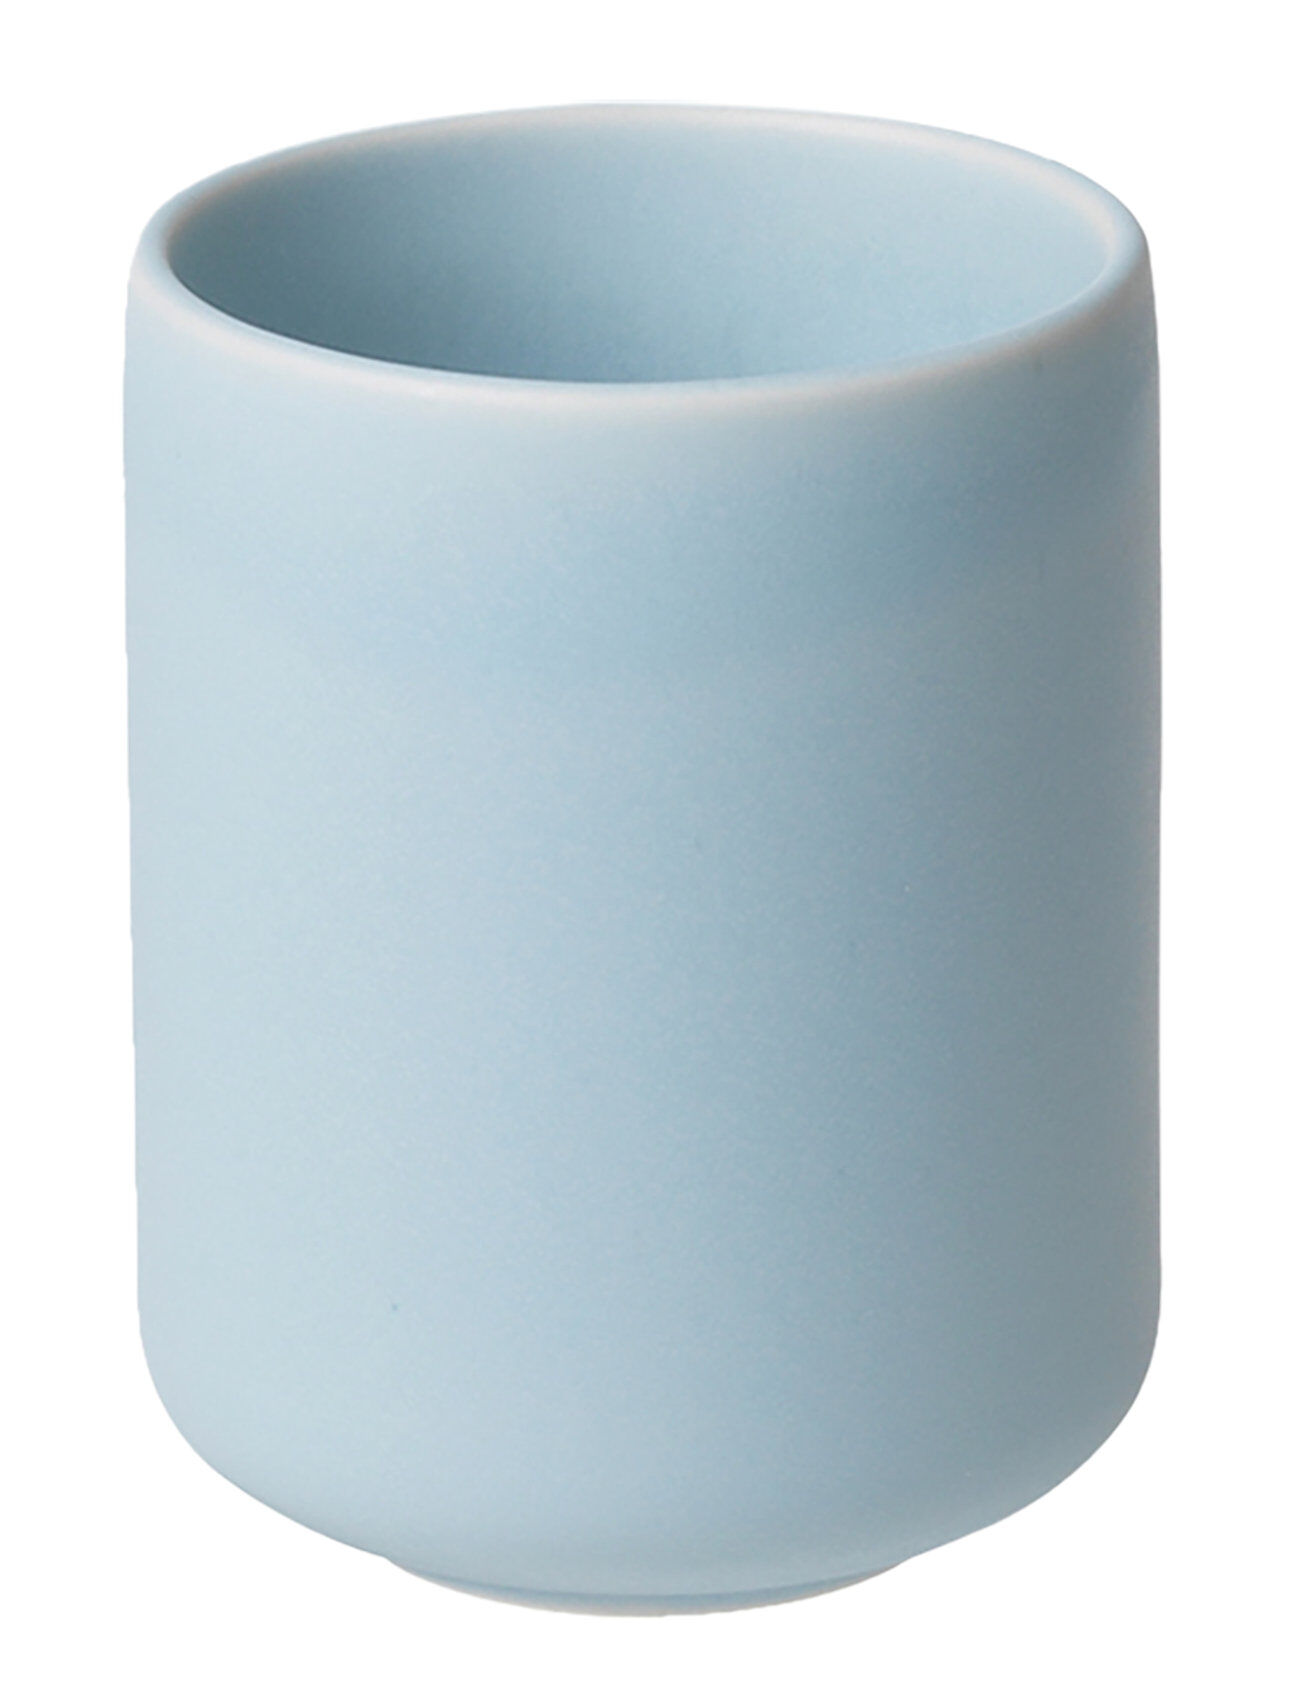 Louise Roe Ceramic Pisu #01 Cup Home Tableware Cups & Mugs Tea Cups Blå Louise Roe